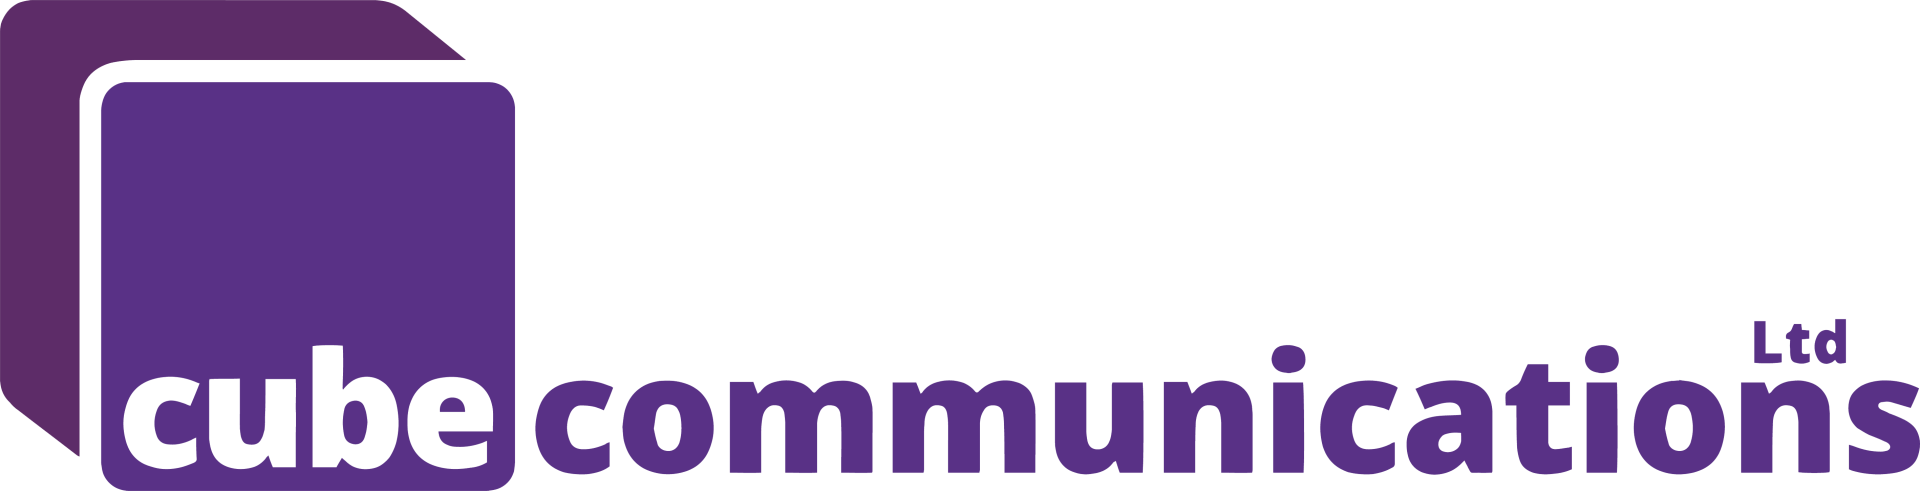 Cube Communications logo